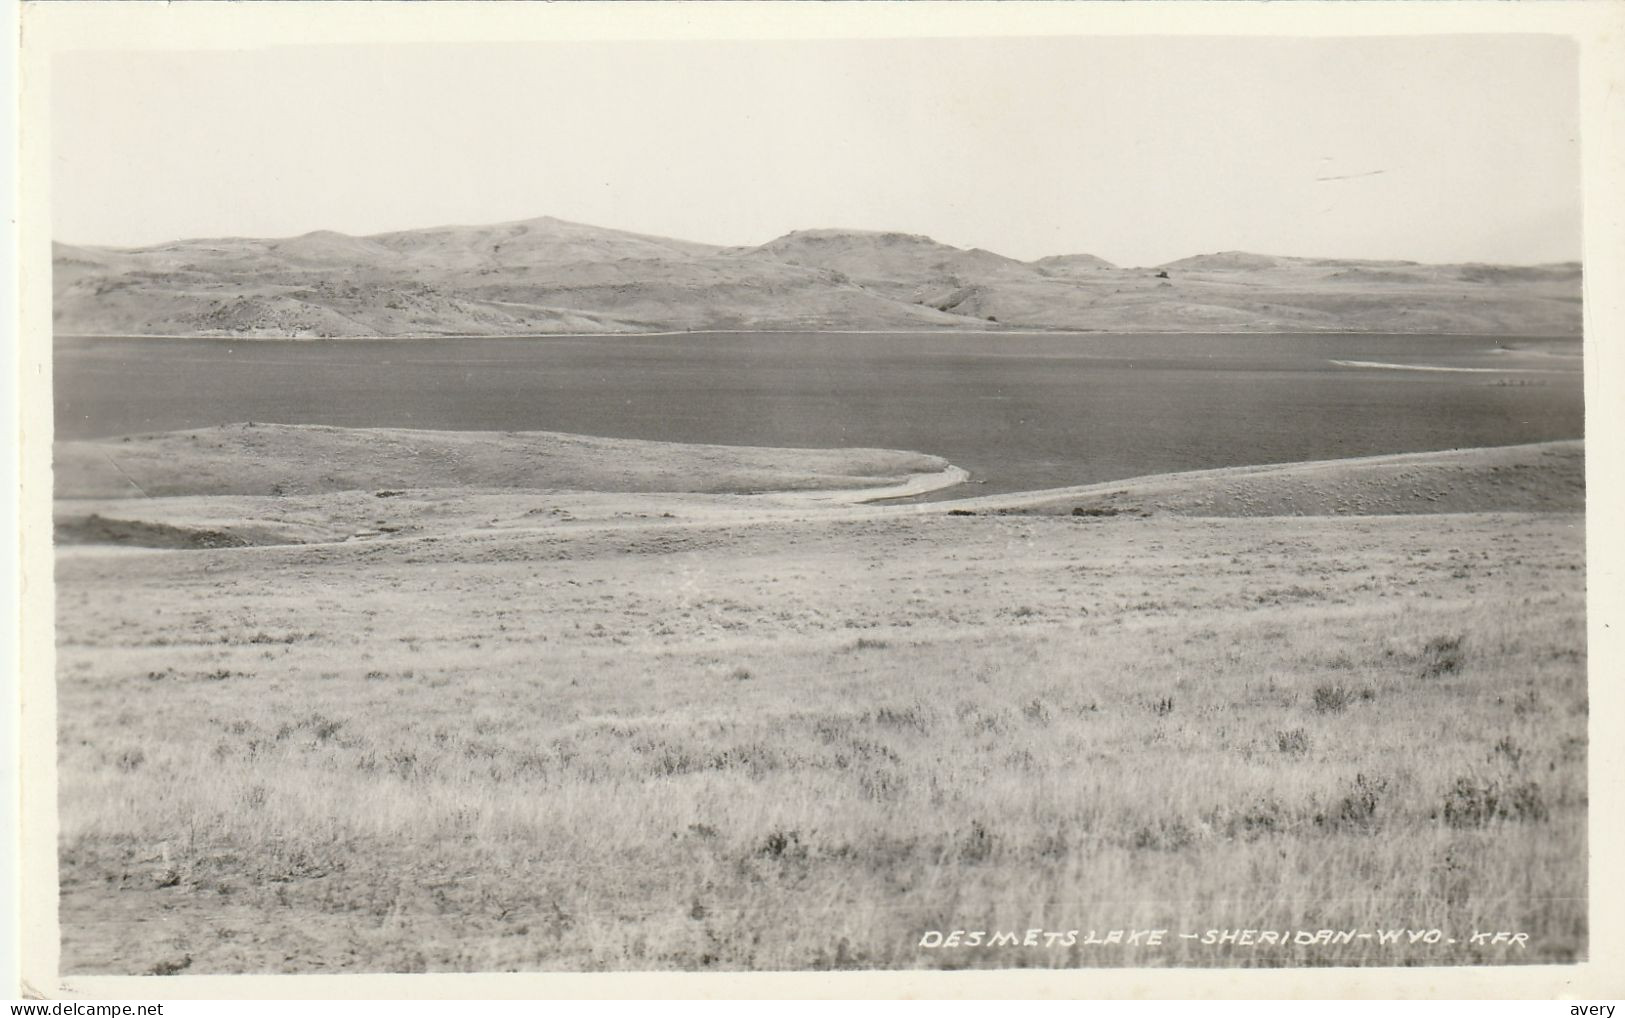 Desmets Lake - Sheridan, Wyoming  R. P. P. C. - Sheridan